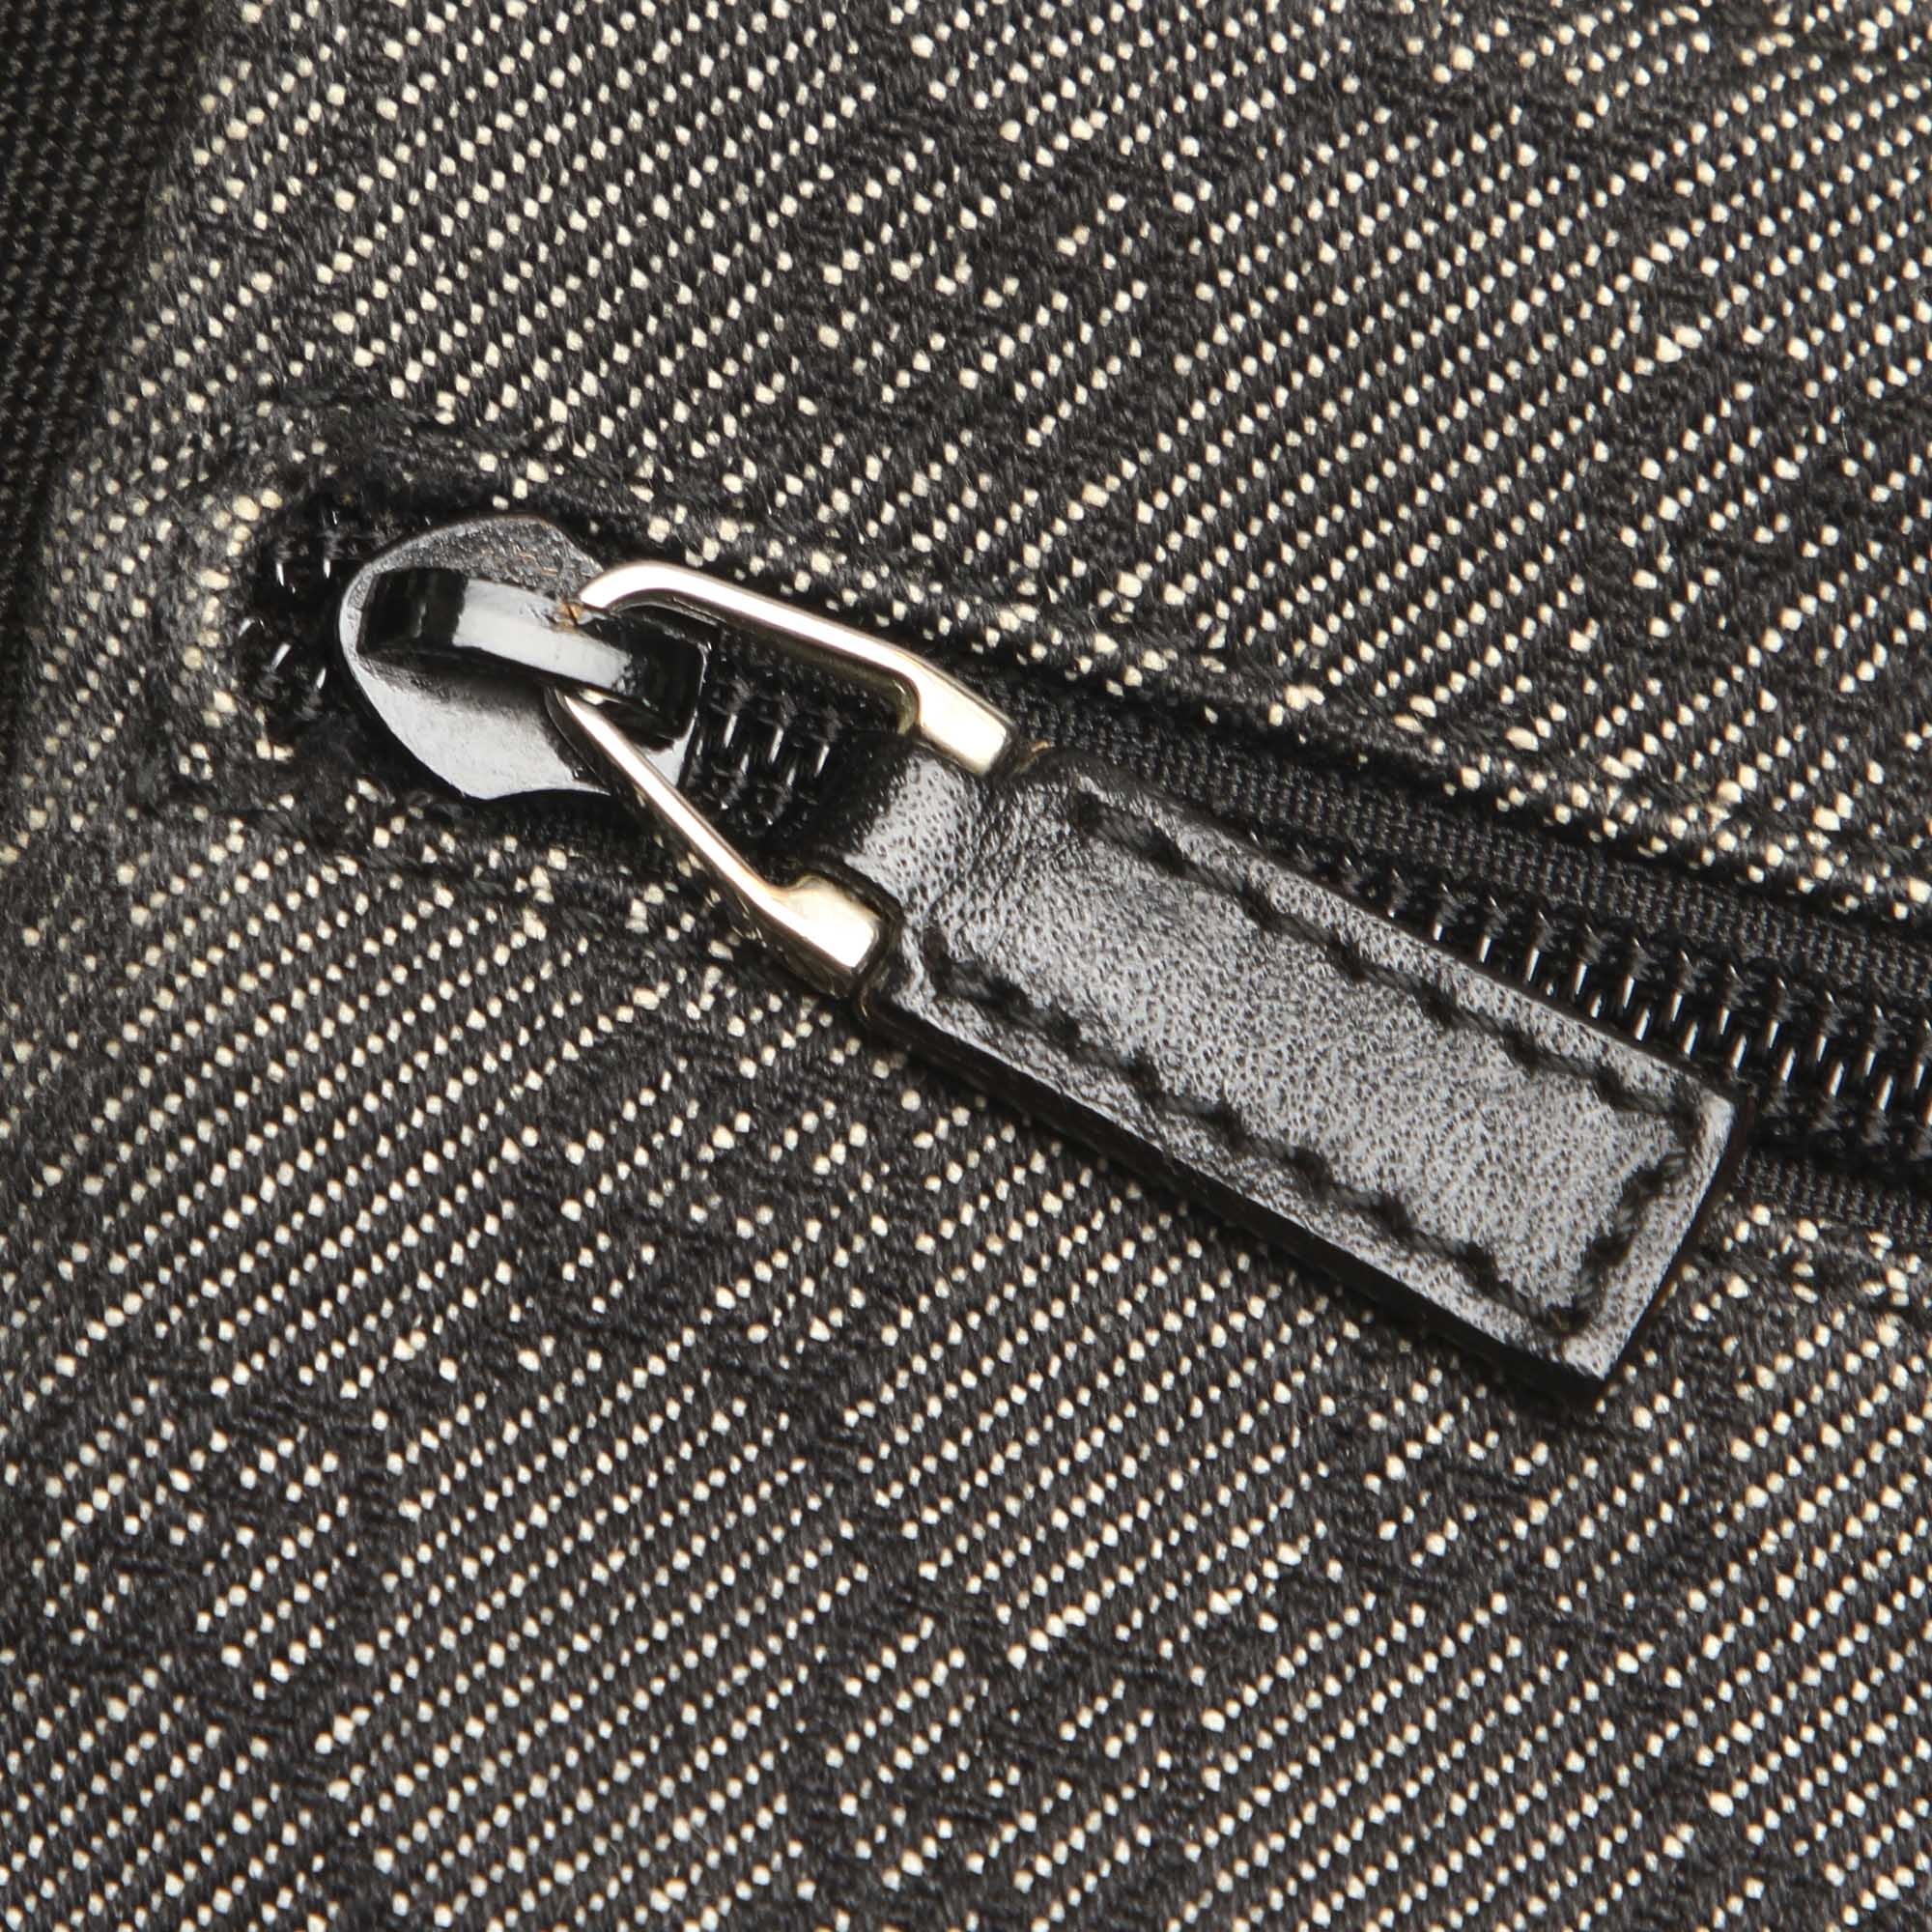 Gucci Phone Case Belt Bag Web Canvas Leather NWT